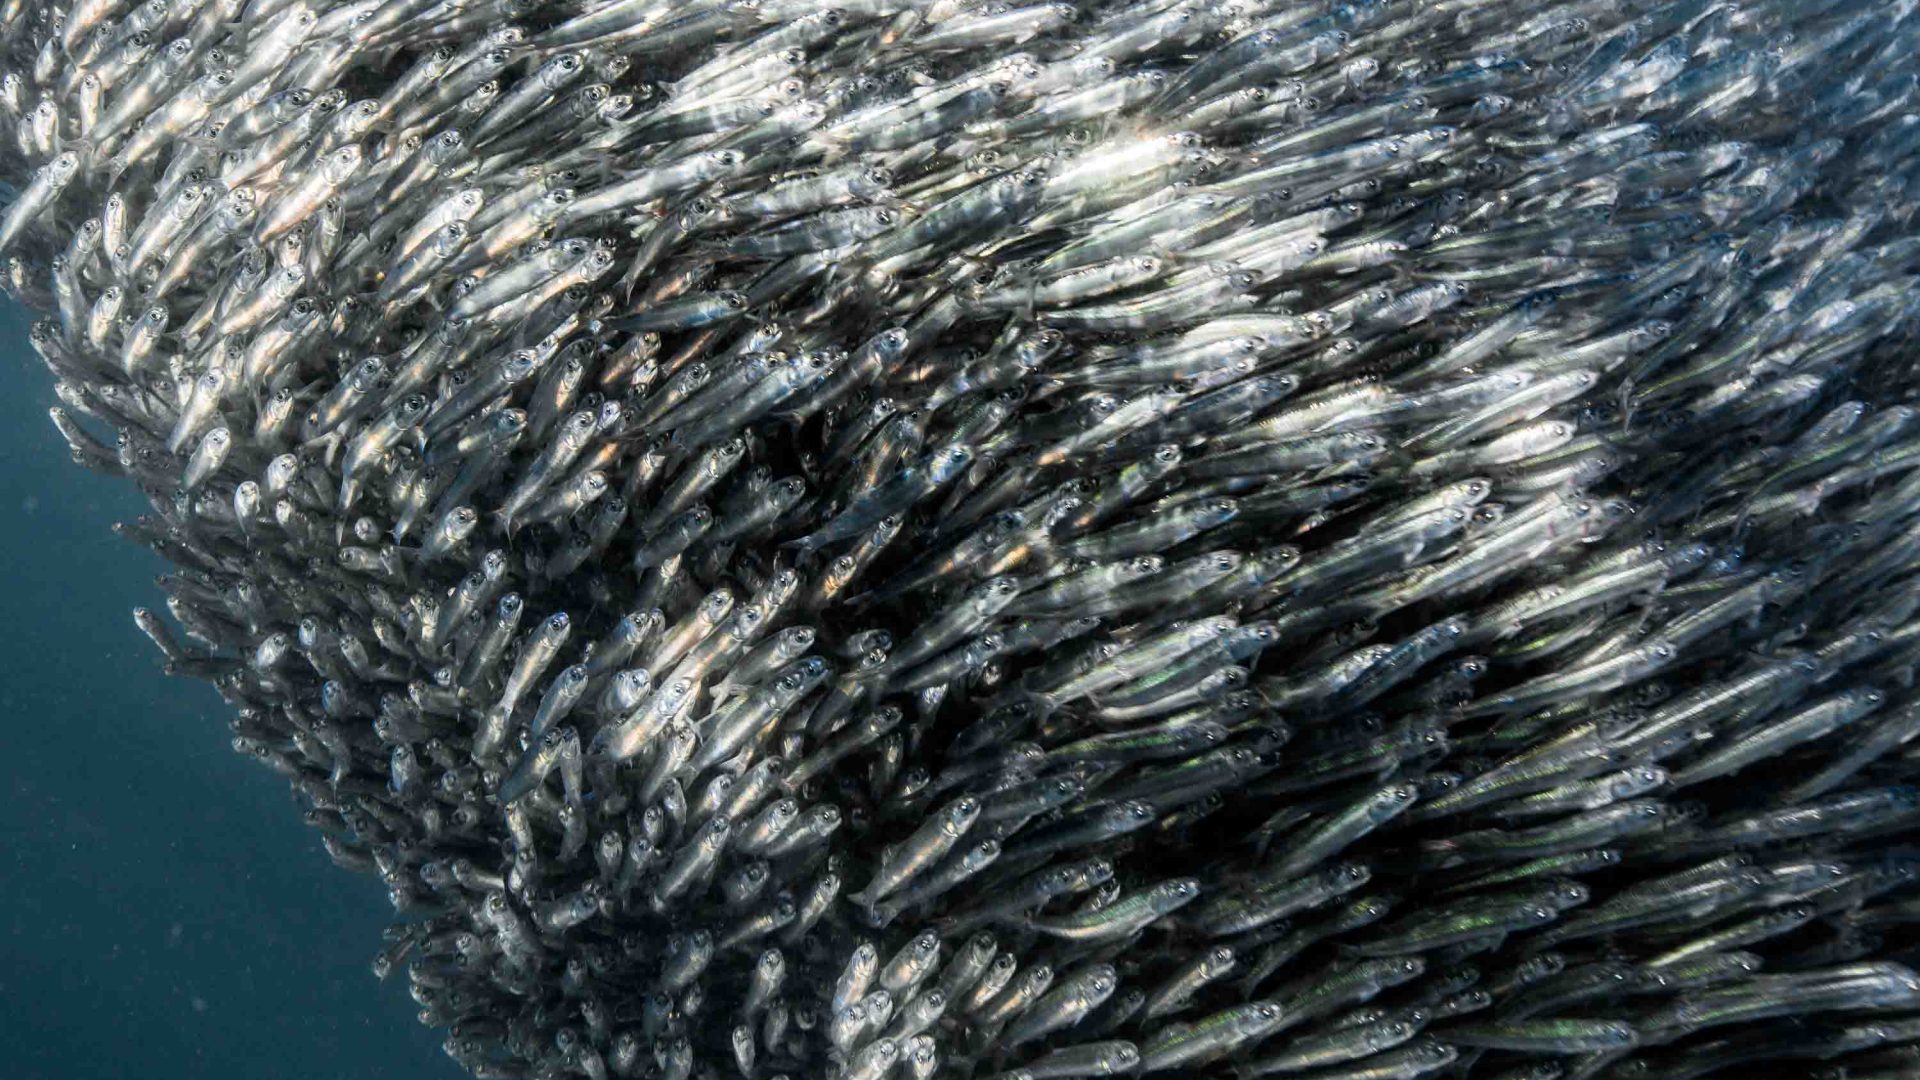 A school of circling sardines.